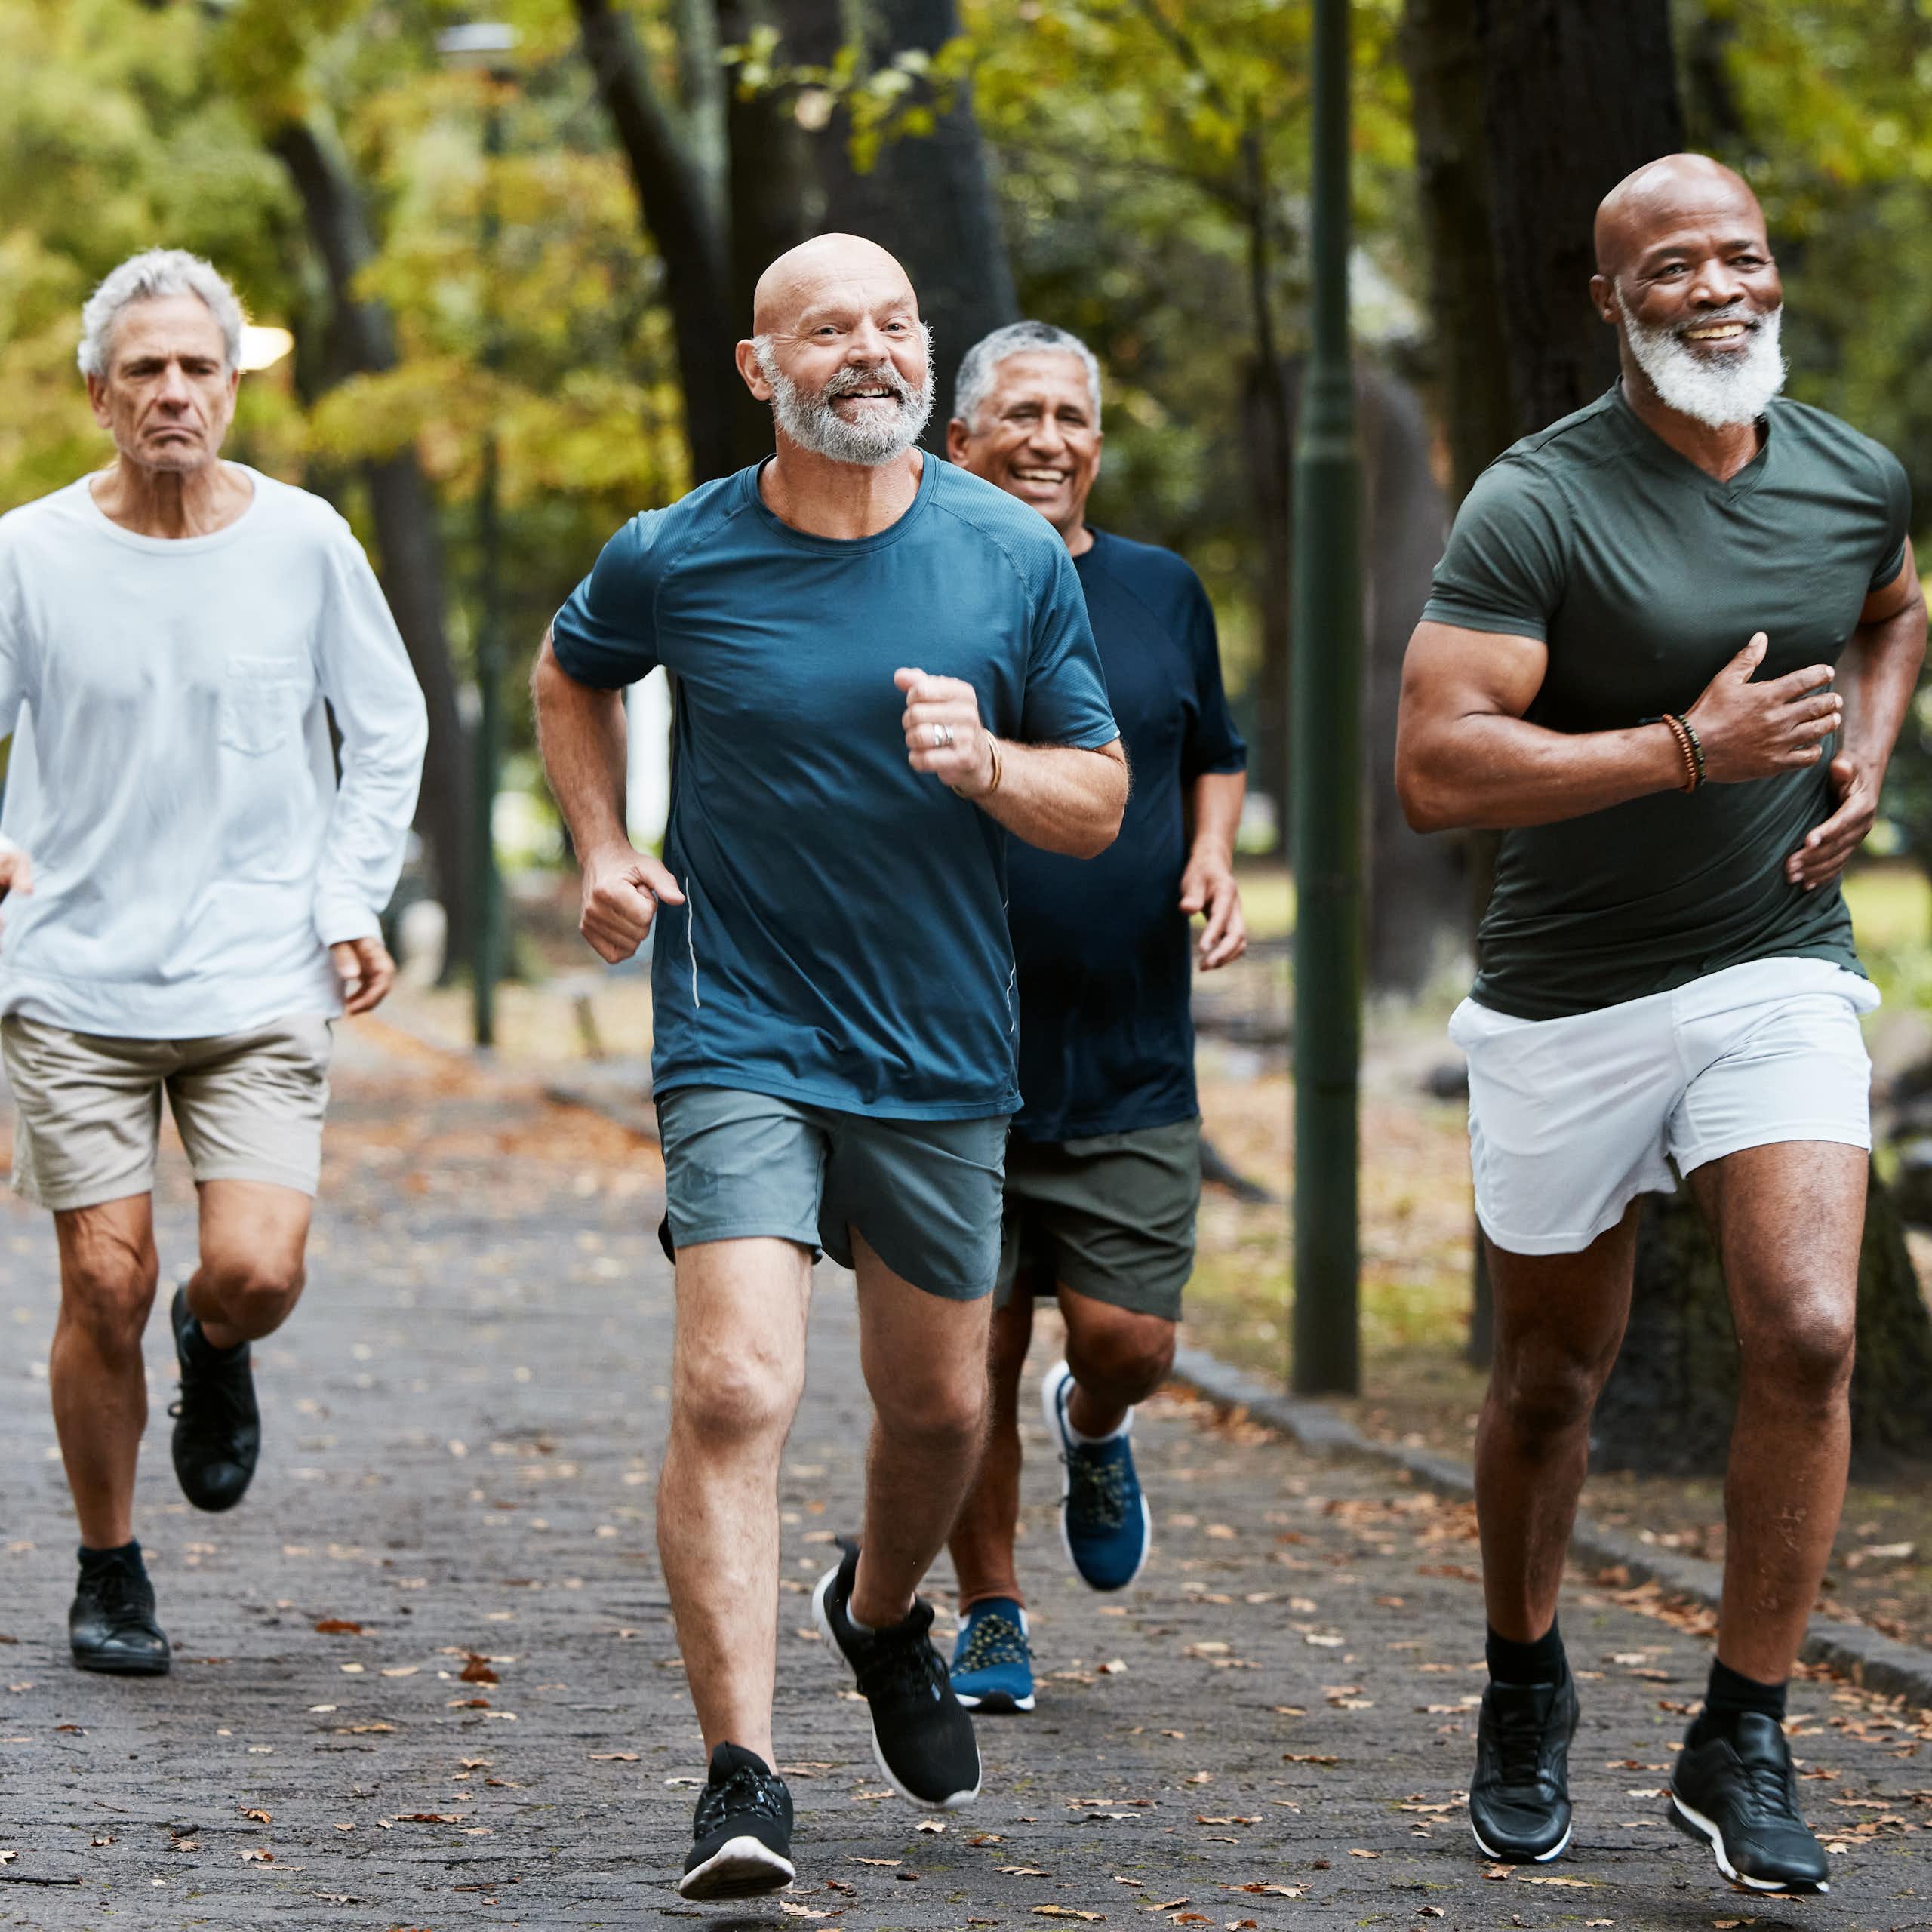 A running group of older men.